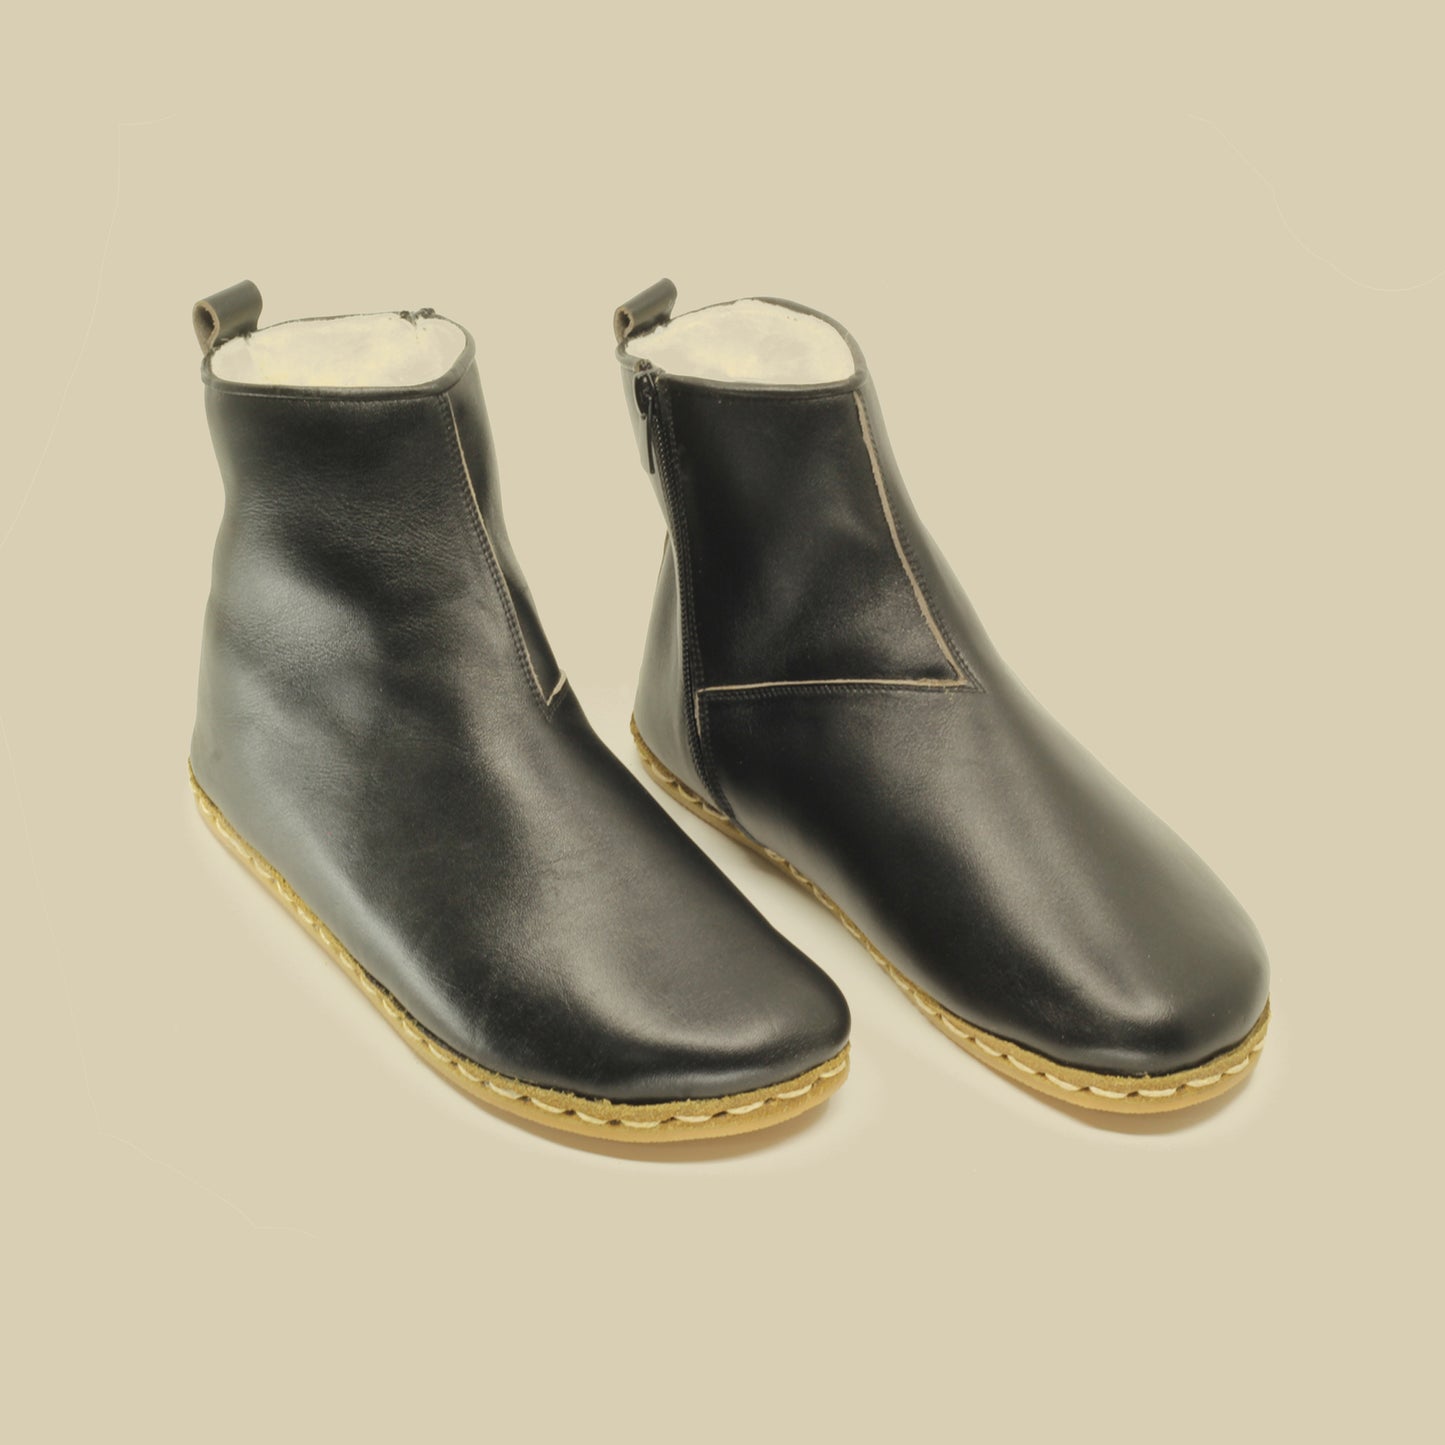 Fur Boot Men, Ankle Barefoot With Zipper - Black - Zero Drop - Rubber Sole